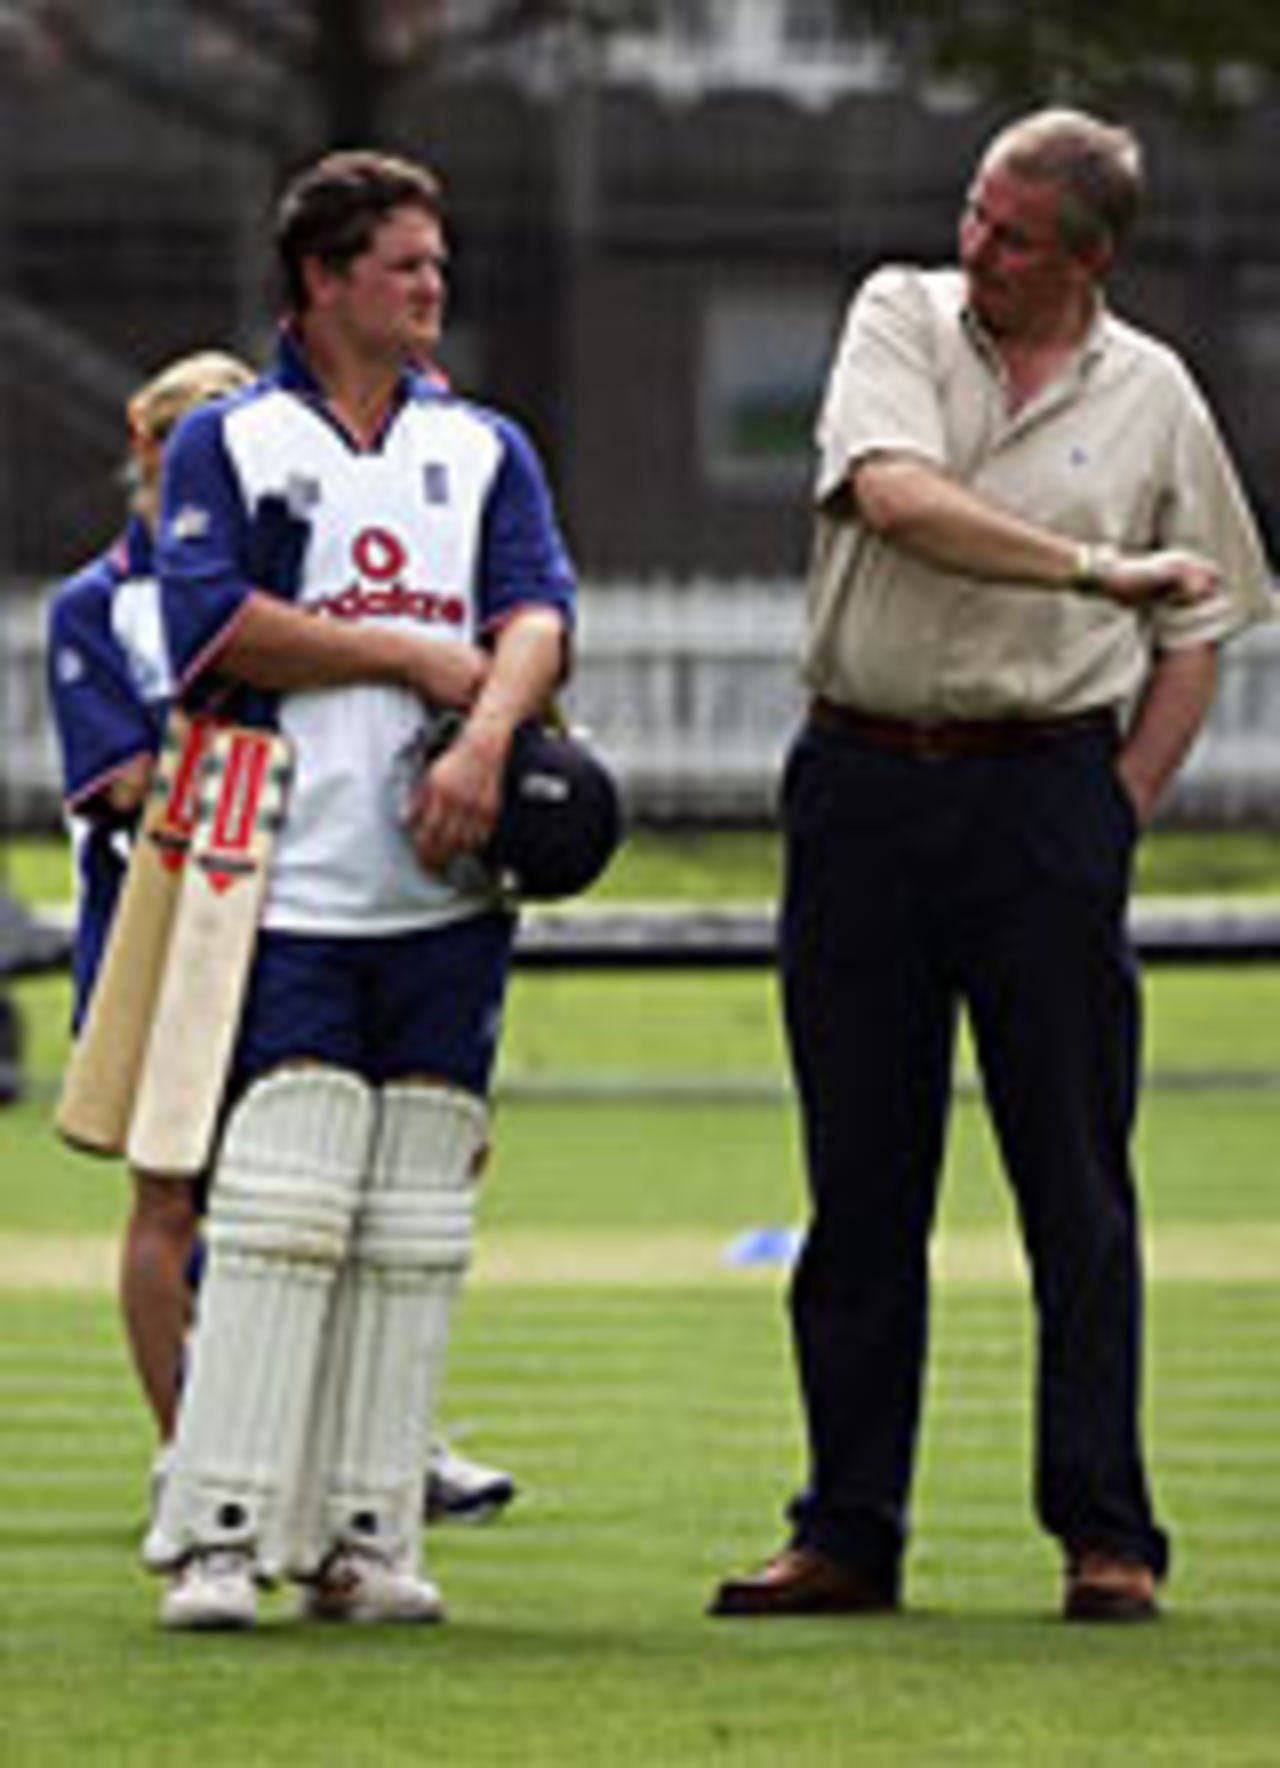 Robert Key and David Graveney, Lord's, July 20, 2004